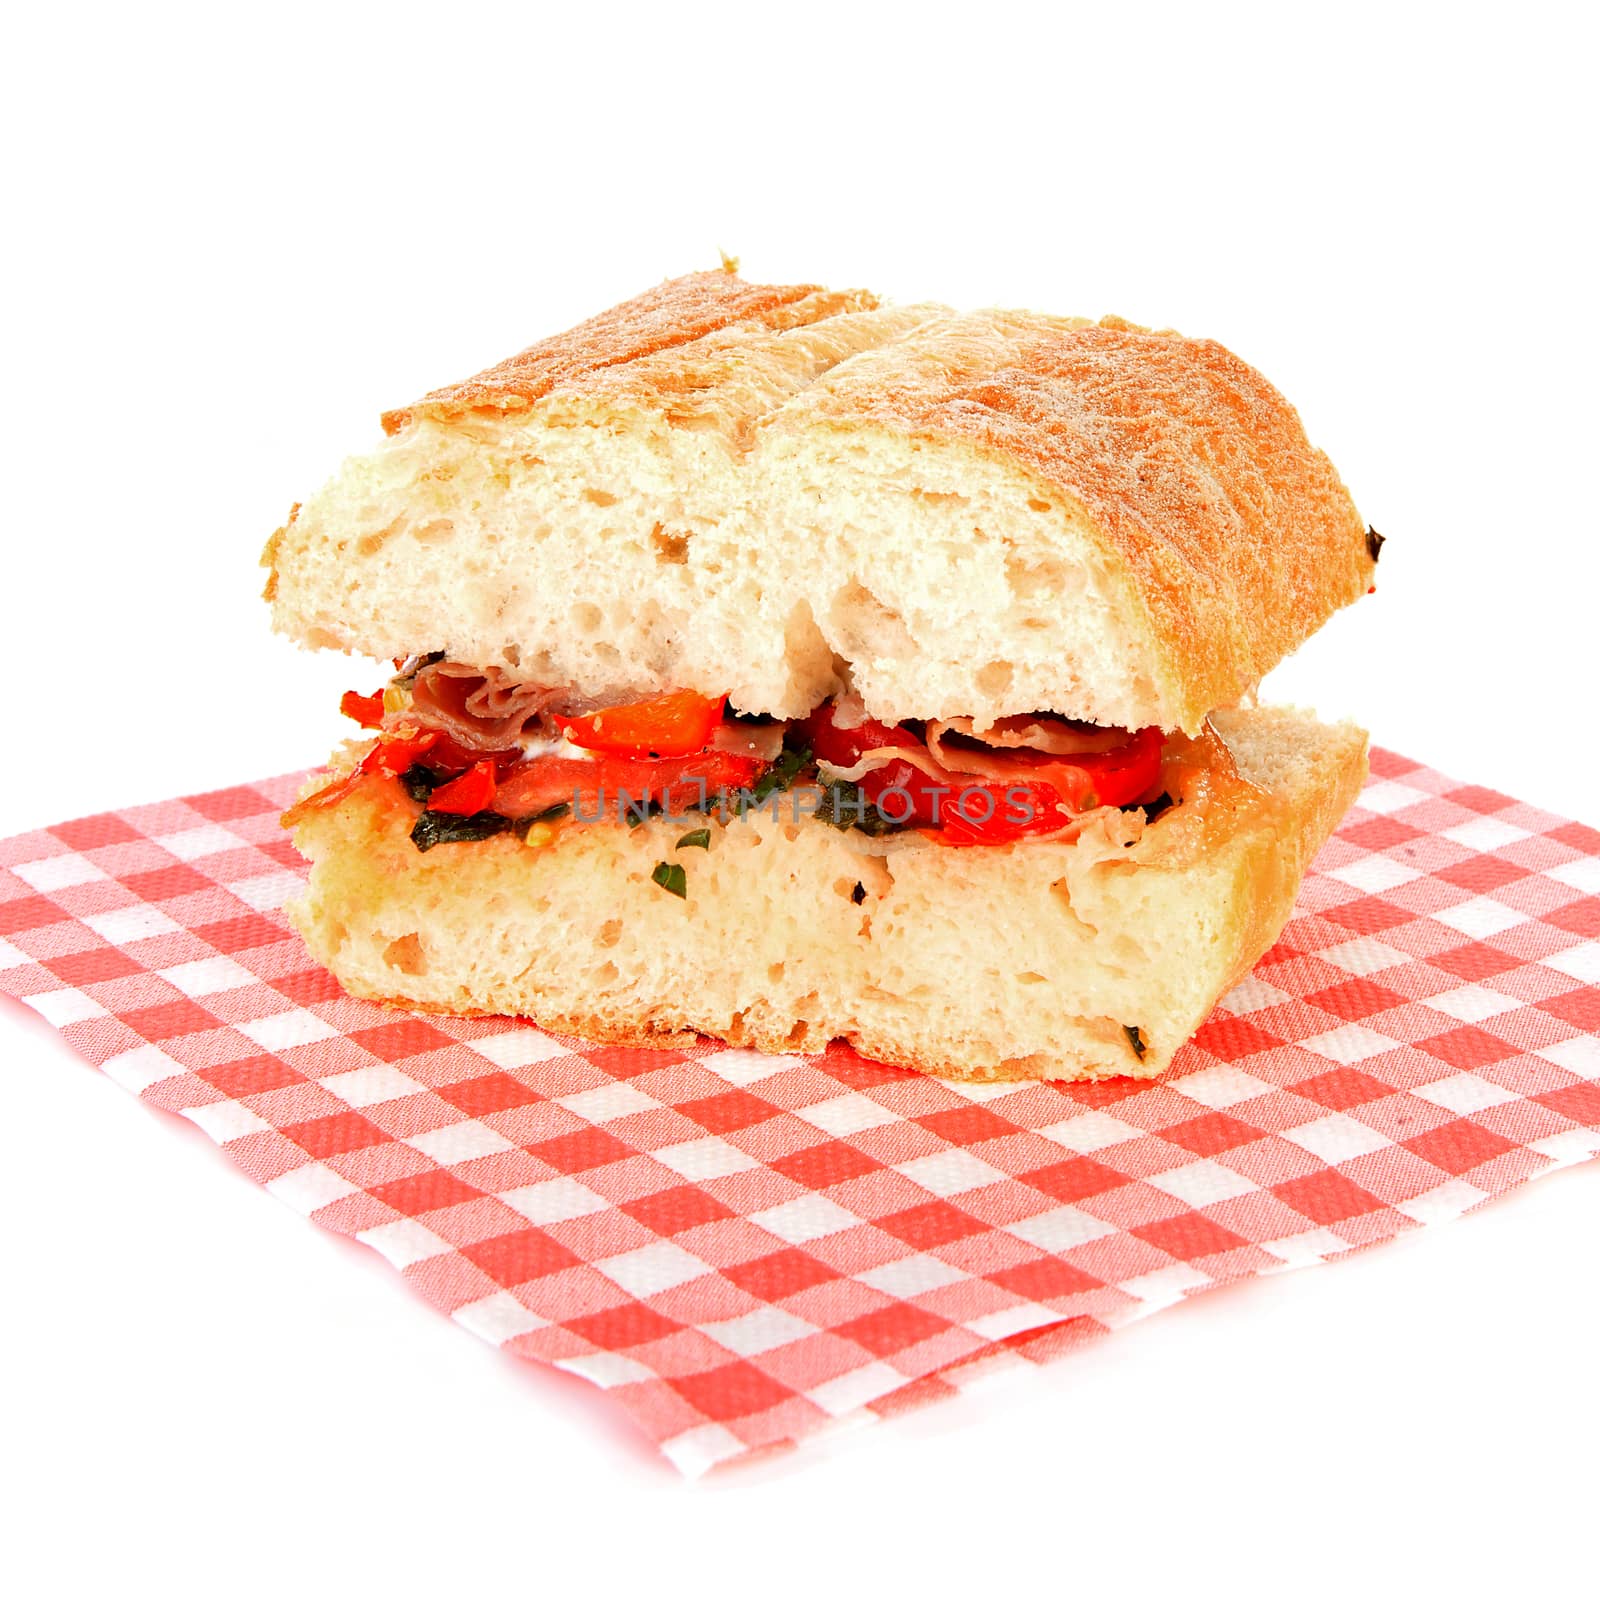 Healthy sandwich on napkin over white background